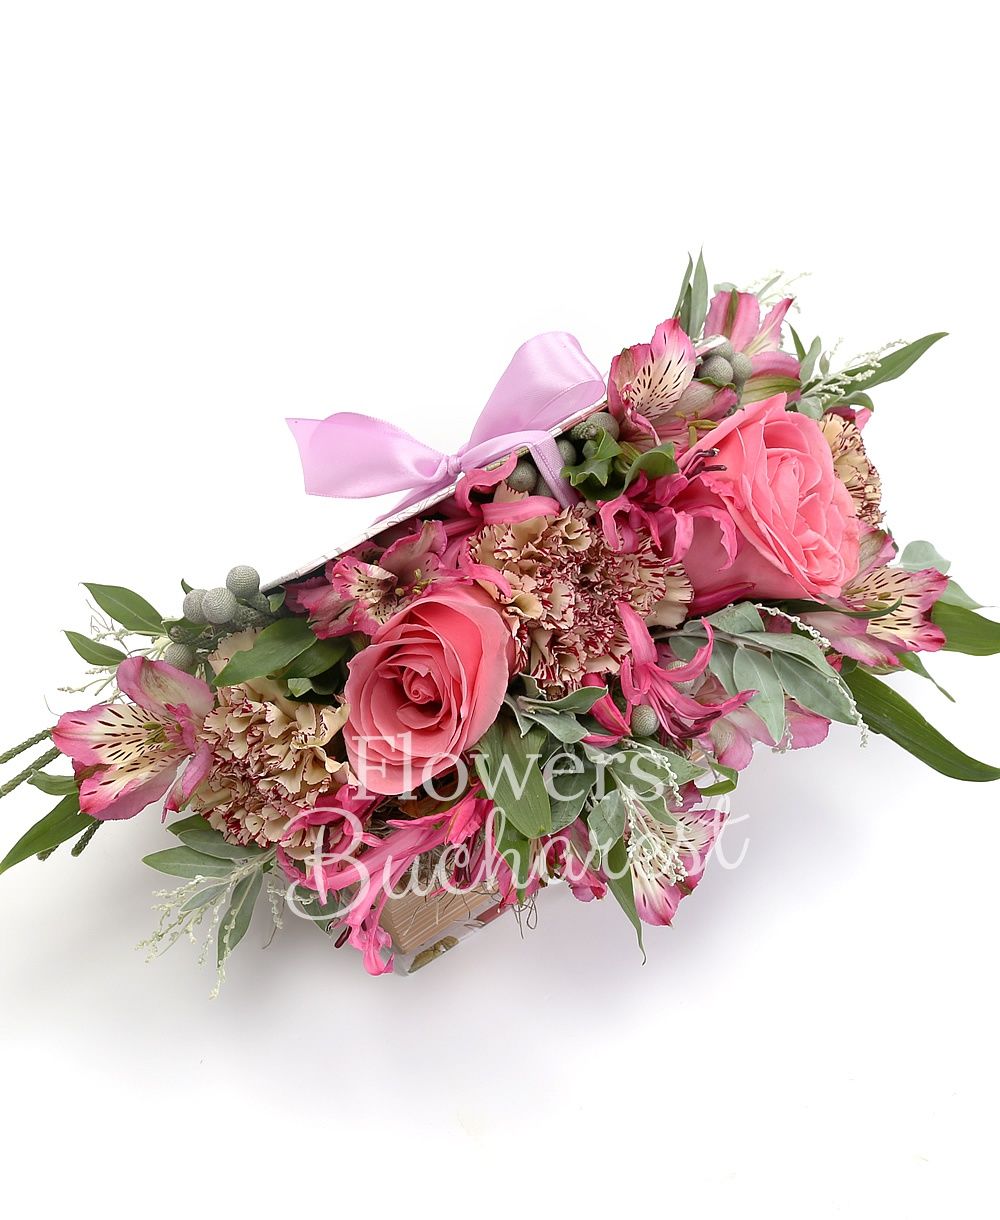 2 pink roses, 3 carnations, 2 pink nerines, 2 pink alstroemeria, brunia, acacia